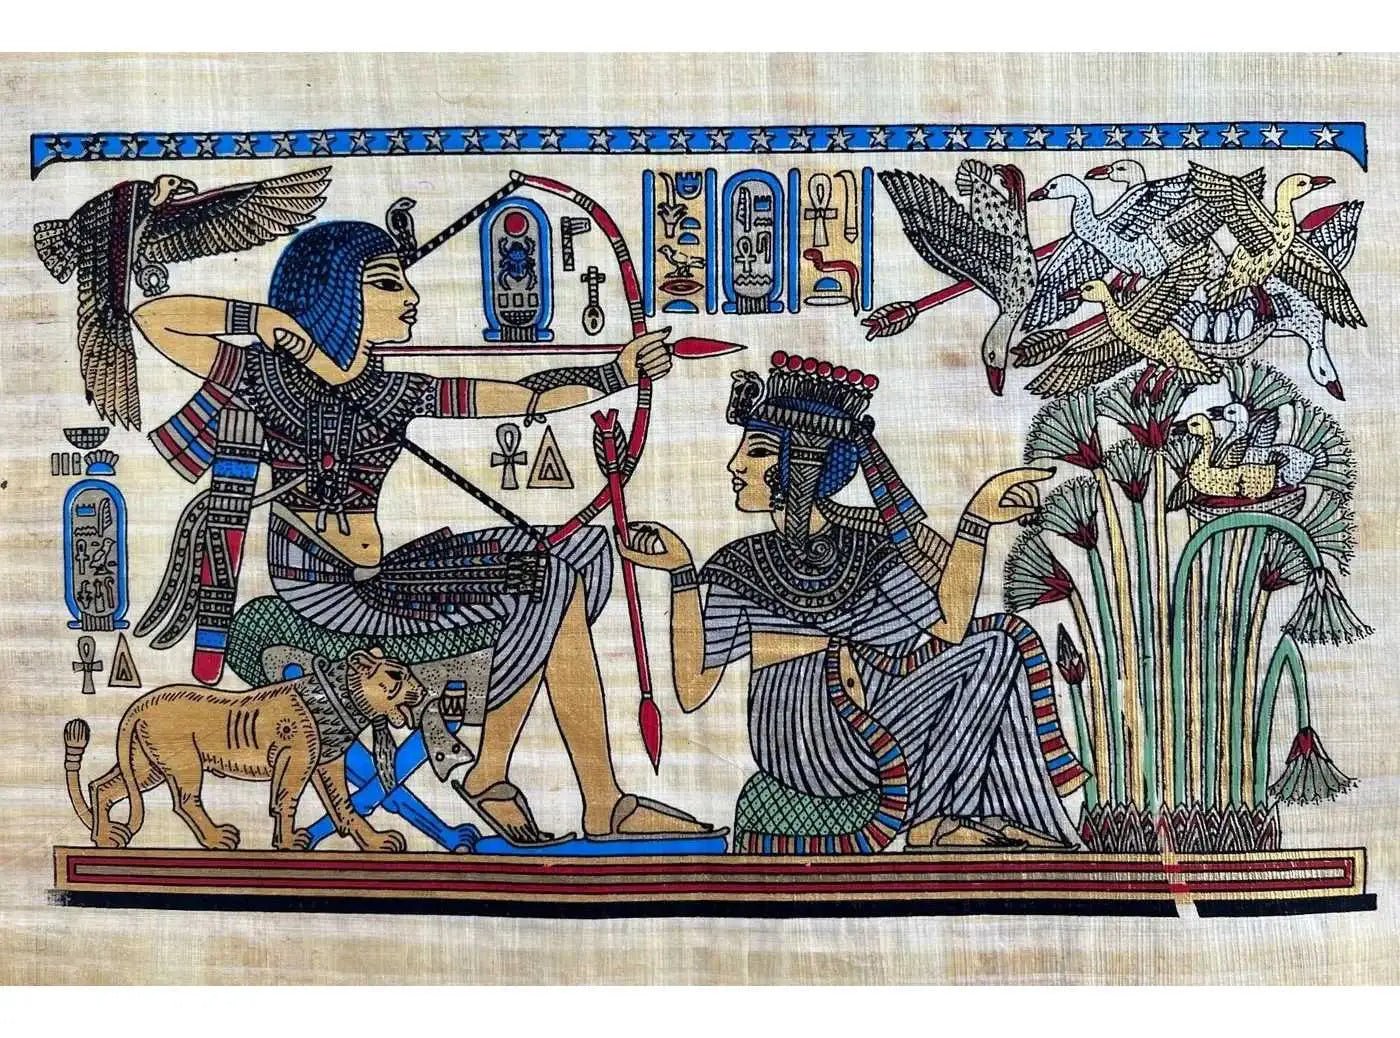 King Tut Tutankhamun and His Wife Hunting Birds - Egyptian Original Hand Painted Papyrus